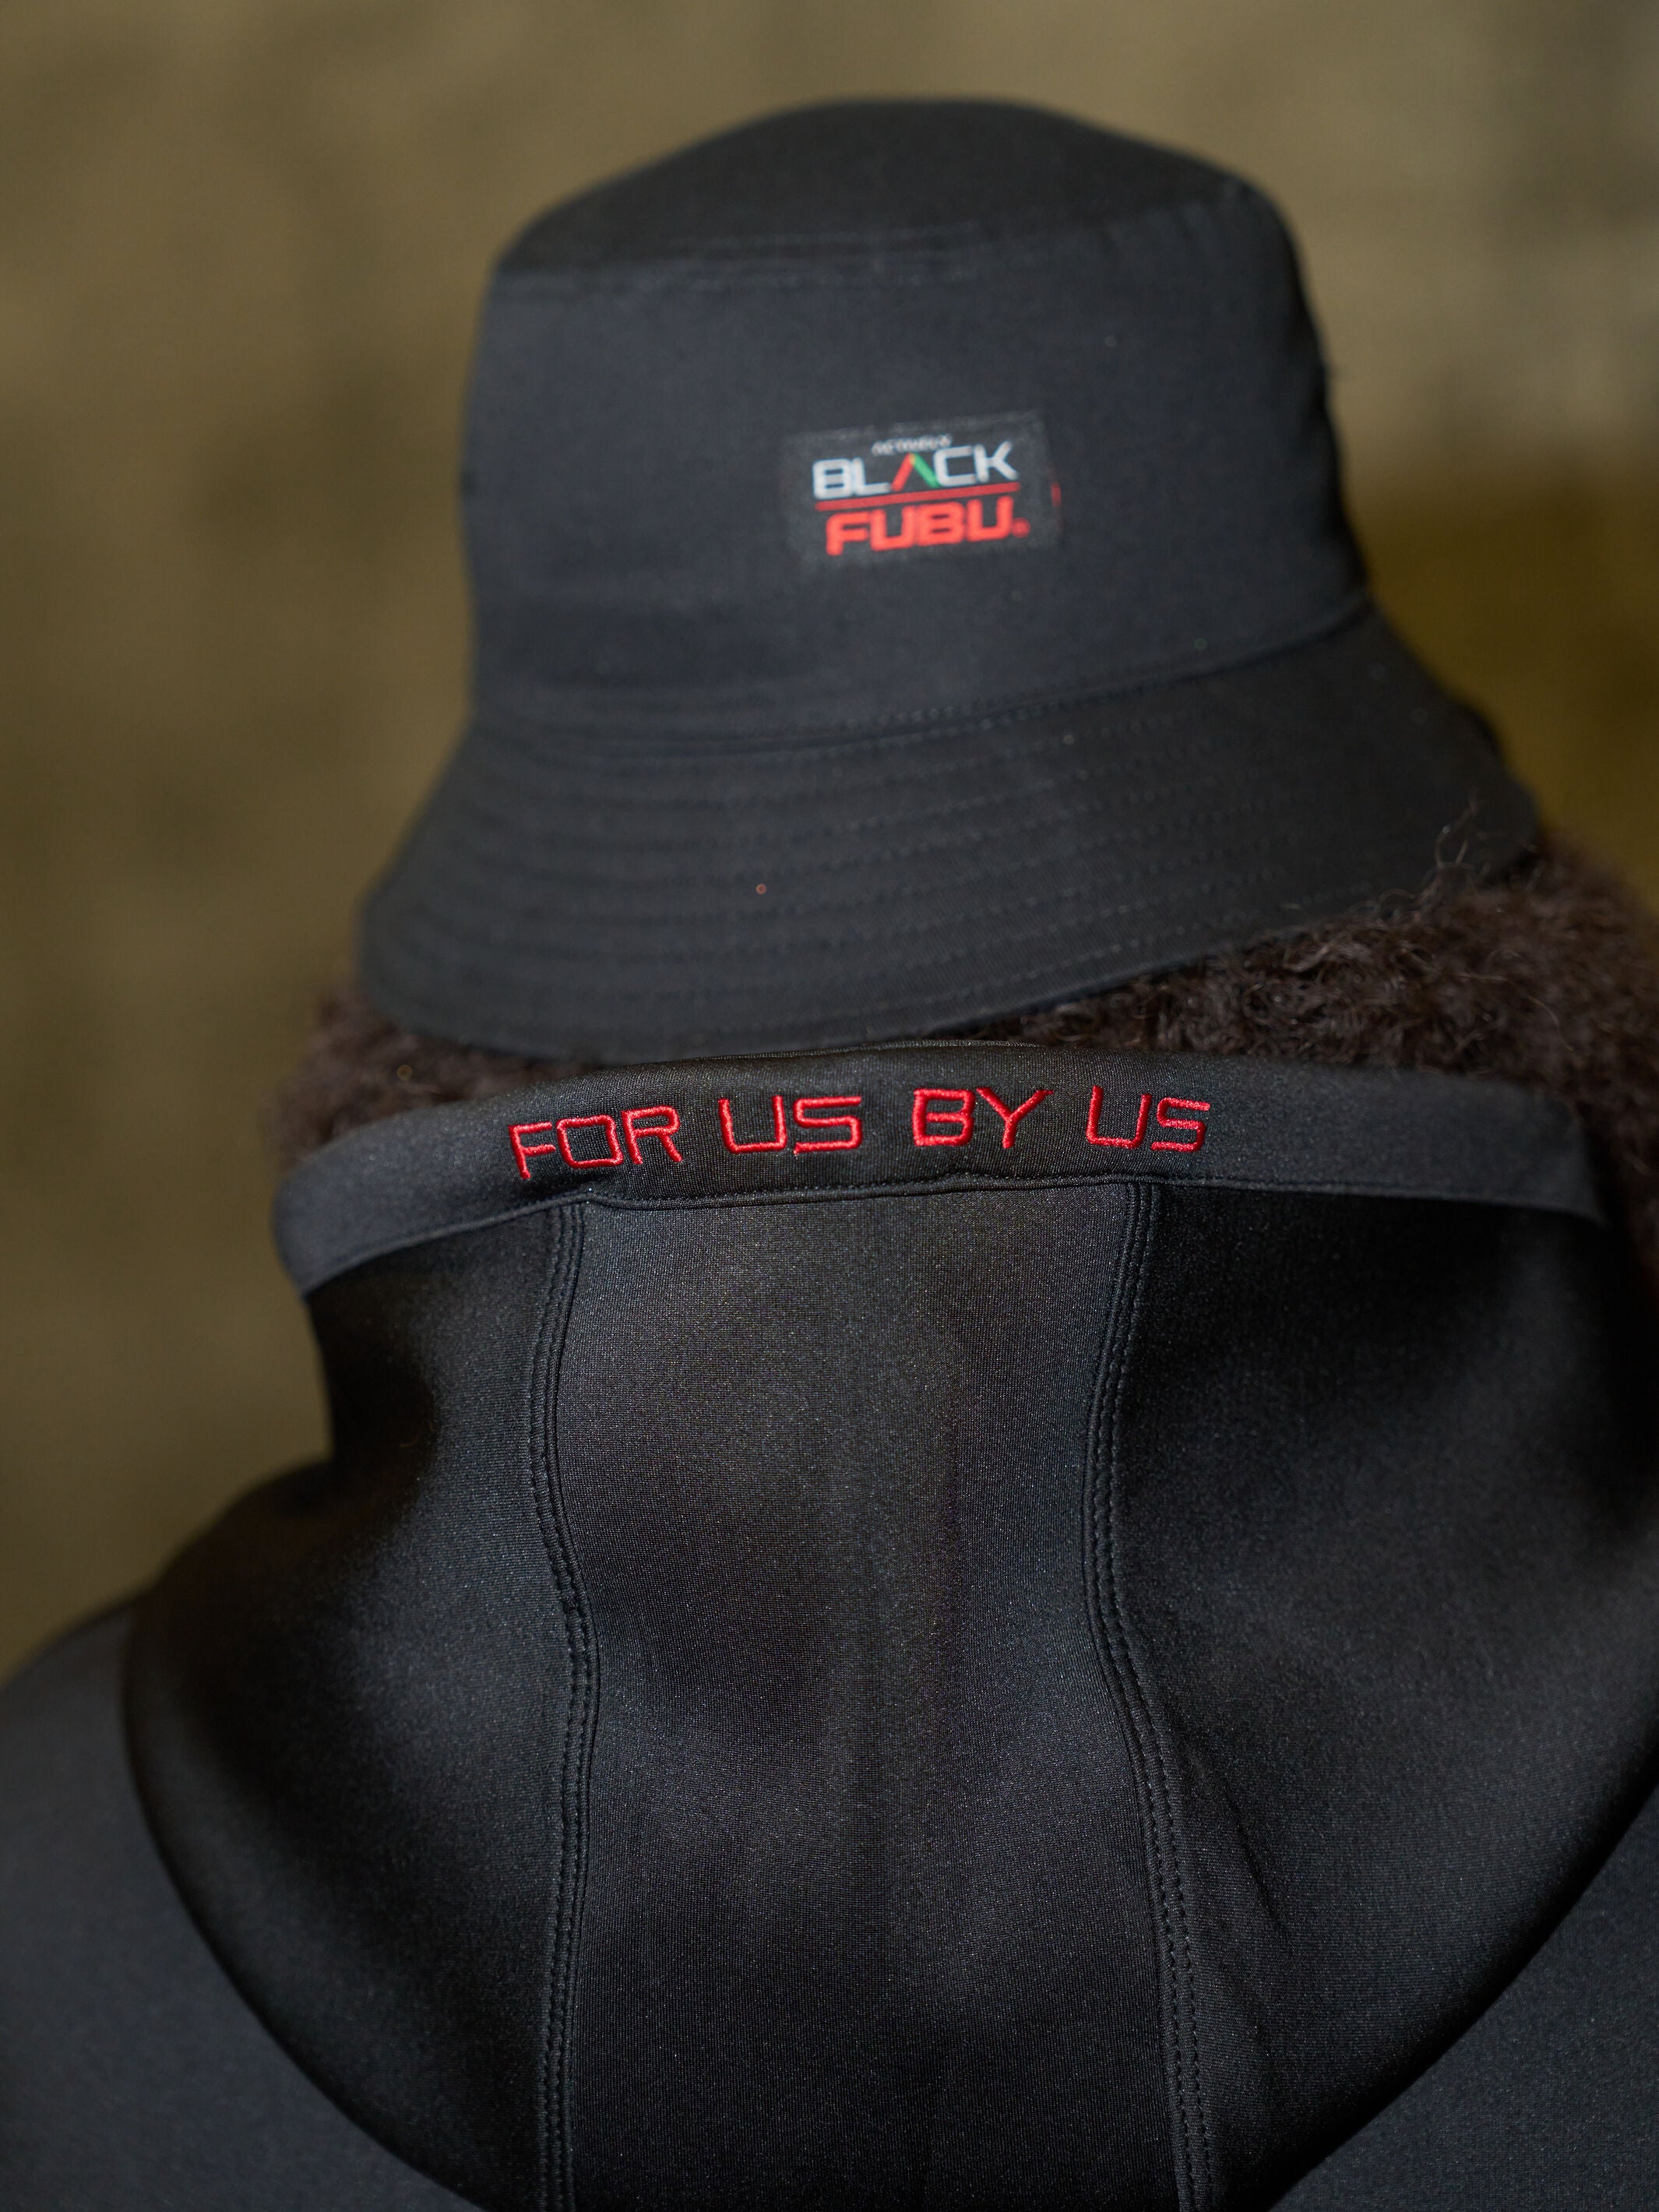 FUBU x Actively Black Premium Bucket Hat